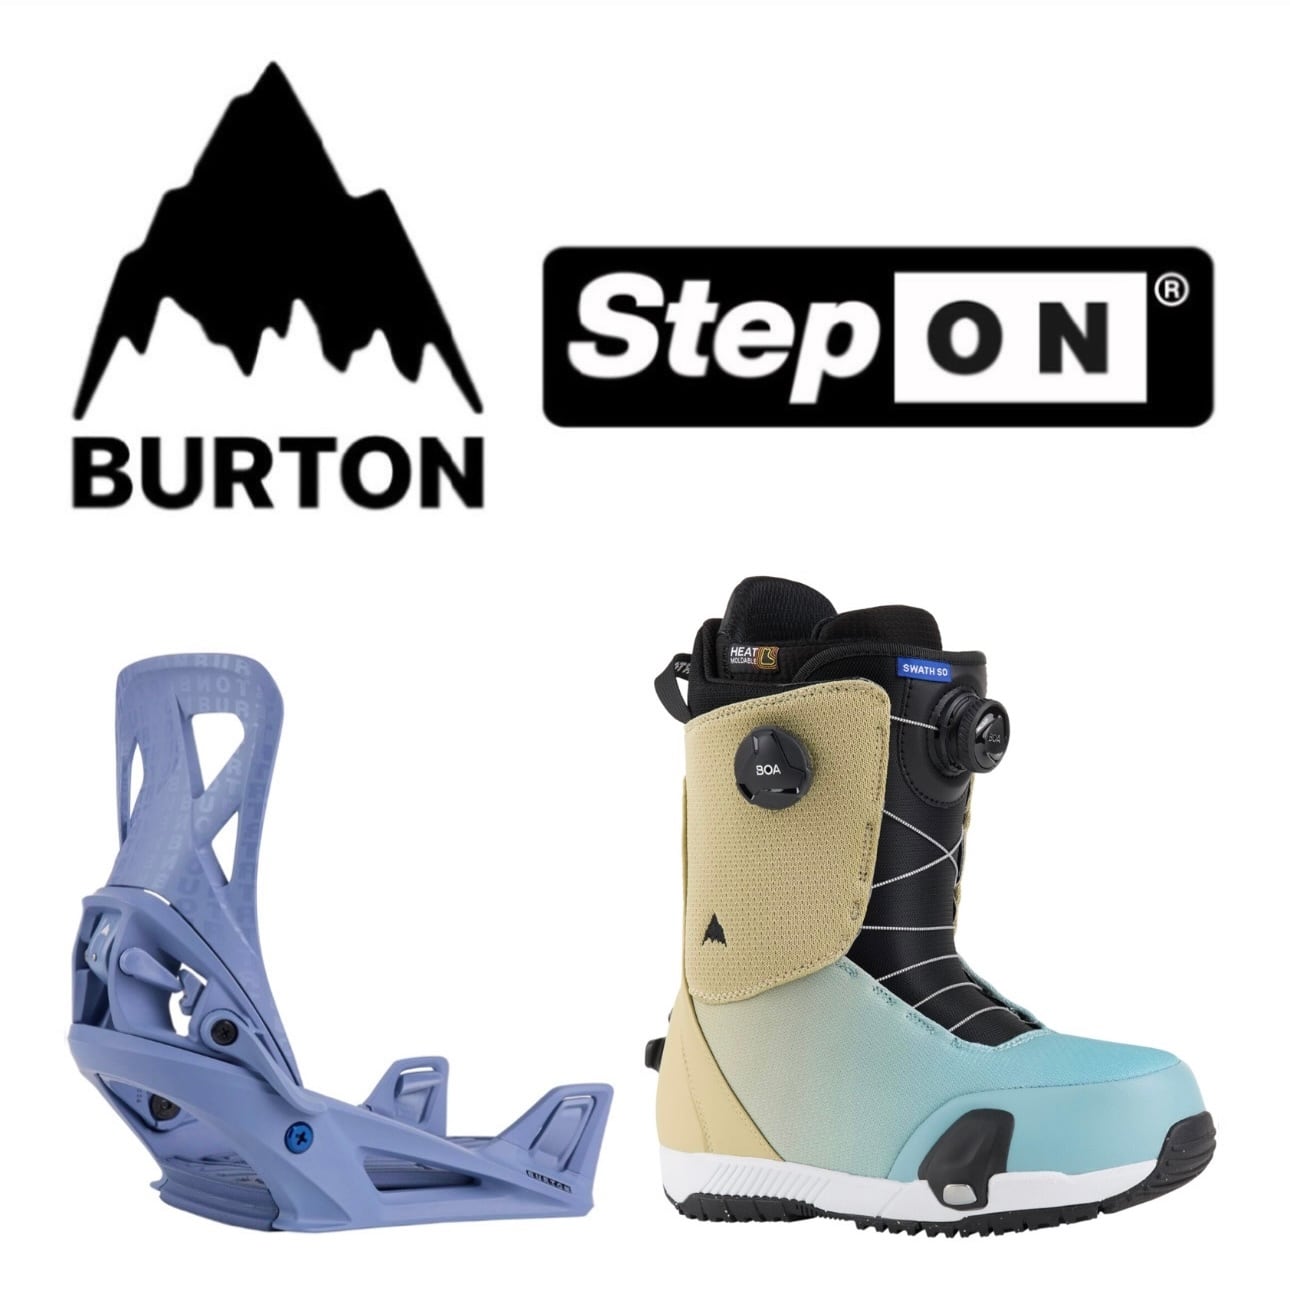 Burton バートン Step On ステップオン Swath スワス Snowboard スノーボード バインディング ブーツ ビンディング  カービング パウダー グラトリ ラントリ バックカントリー フリーラン オールマウンテン オールラウンド メンズ レディース